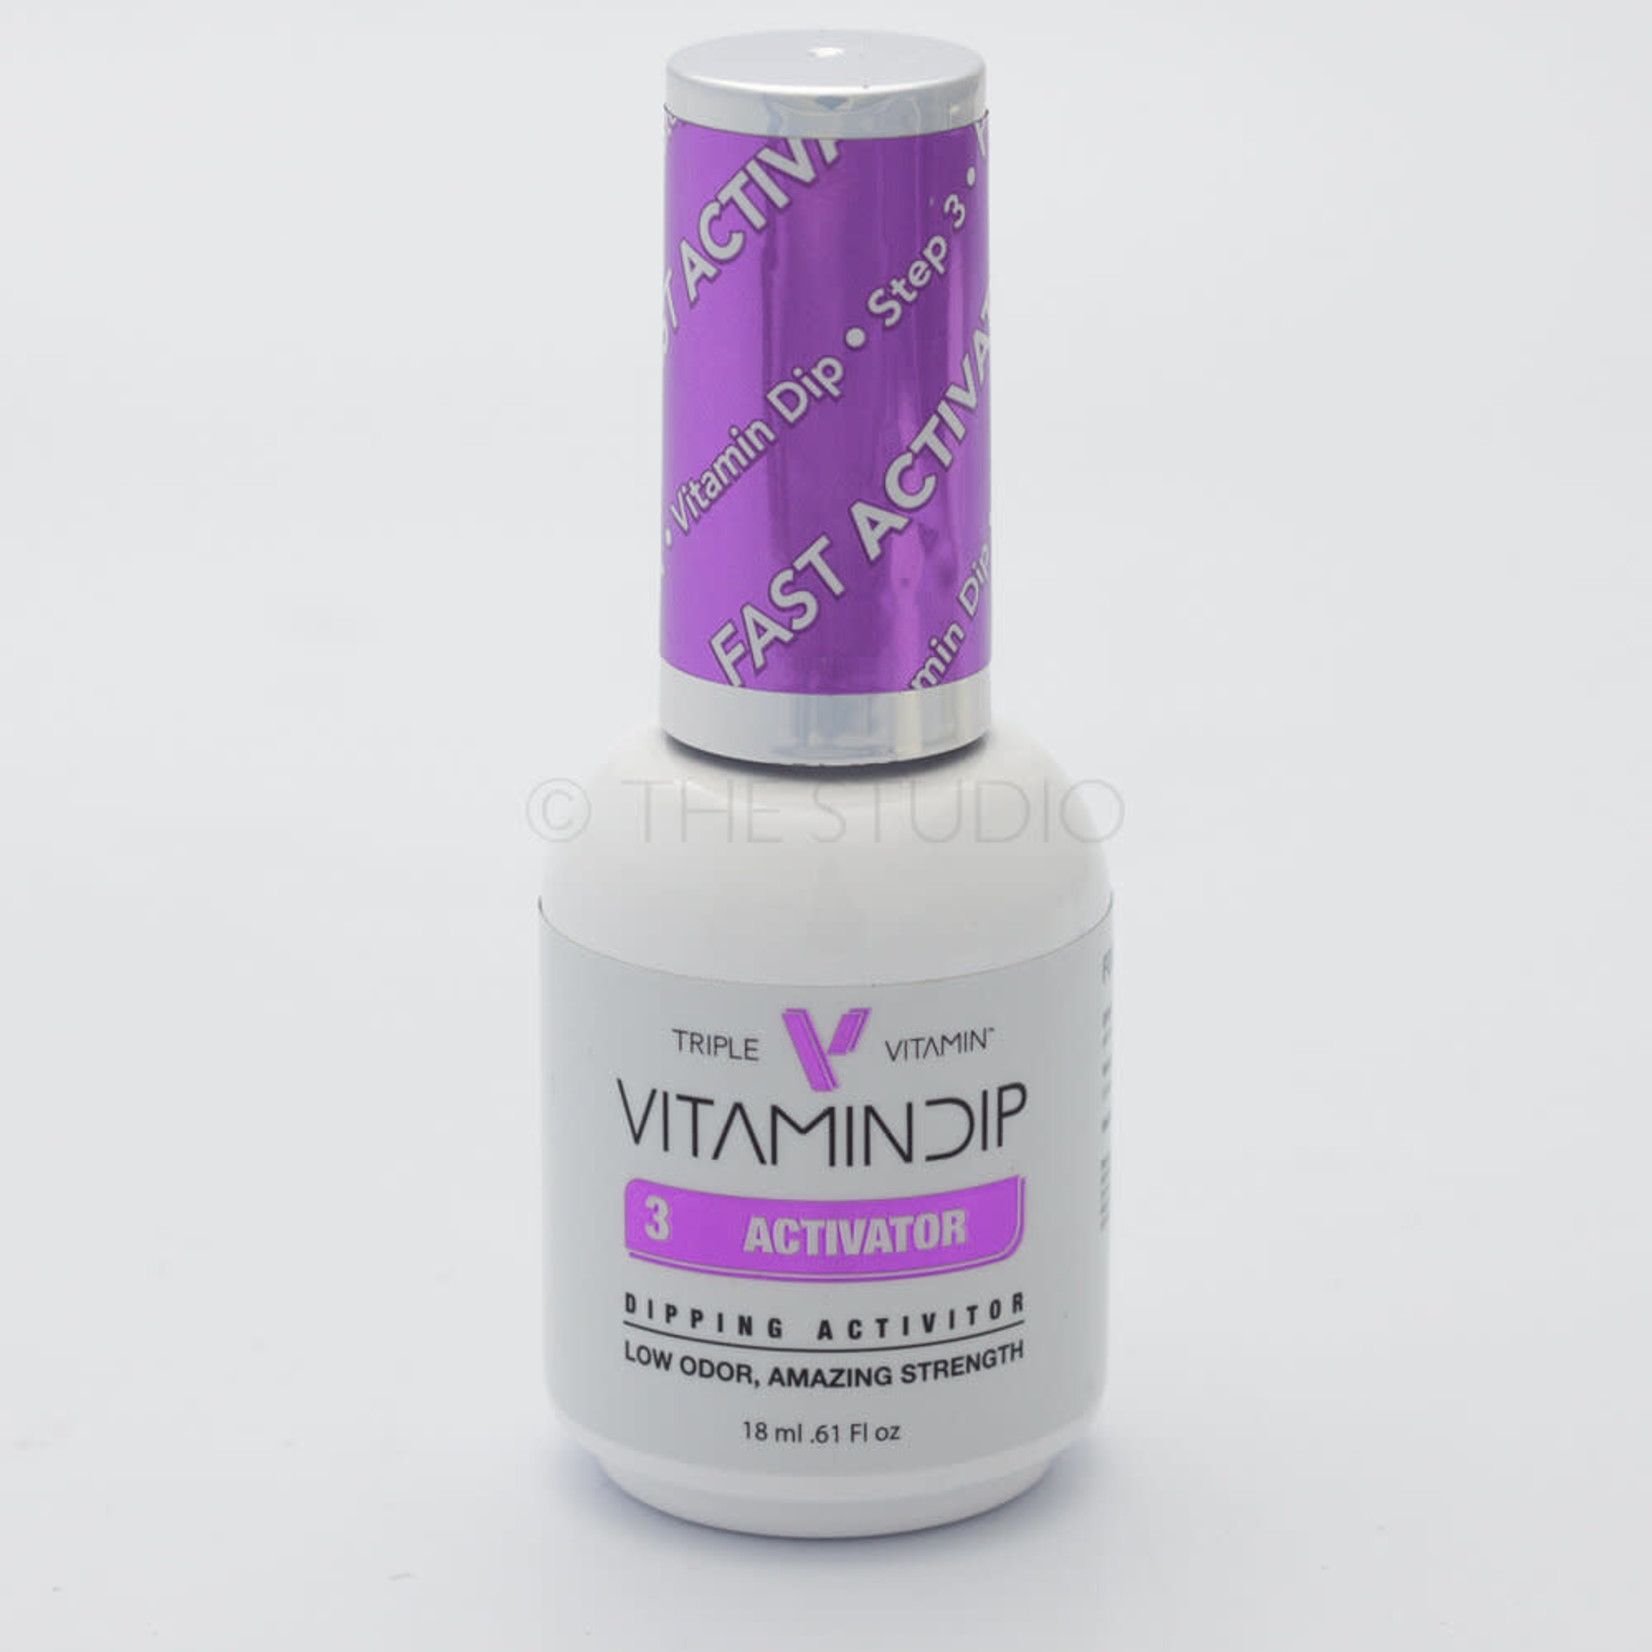 Vitamin Dip Triple Vitamin Dip - Dip Liquid - #3 Activator